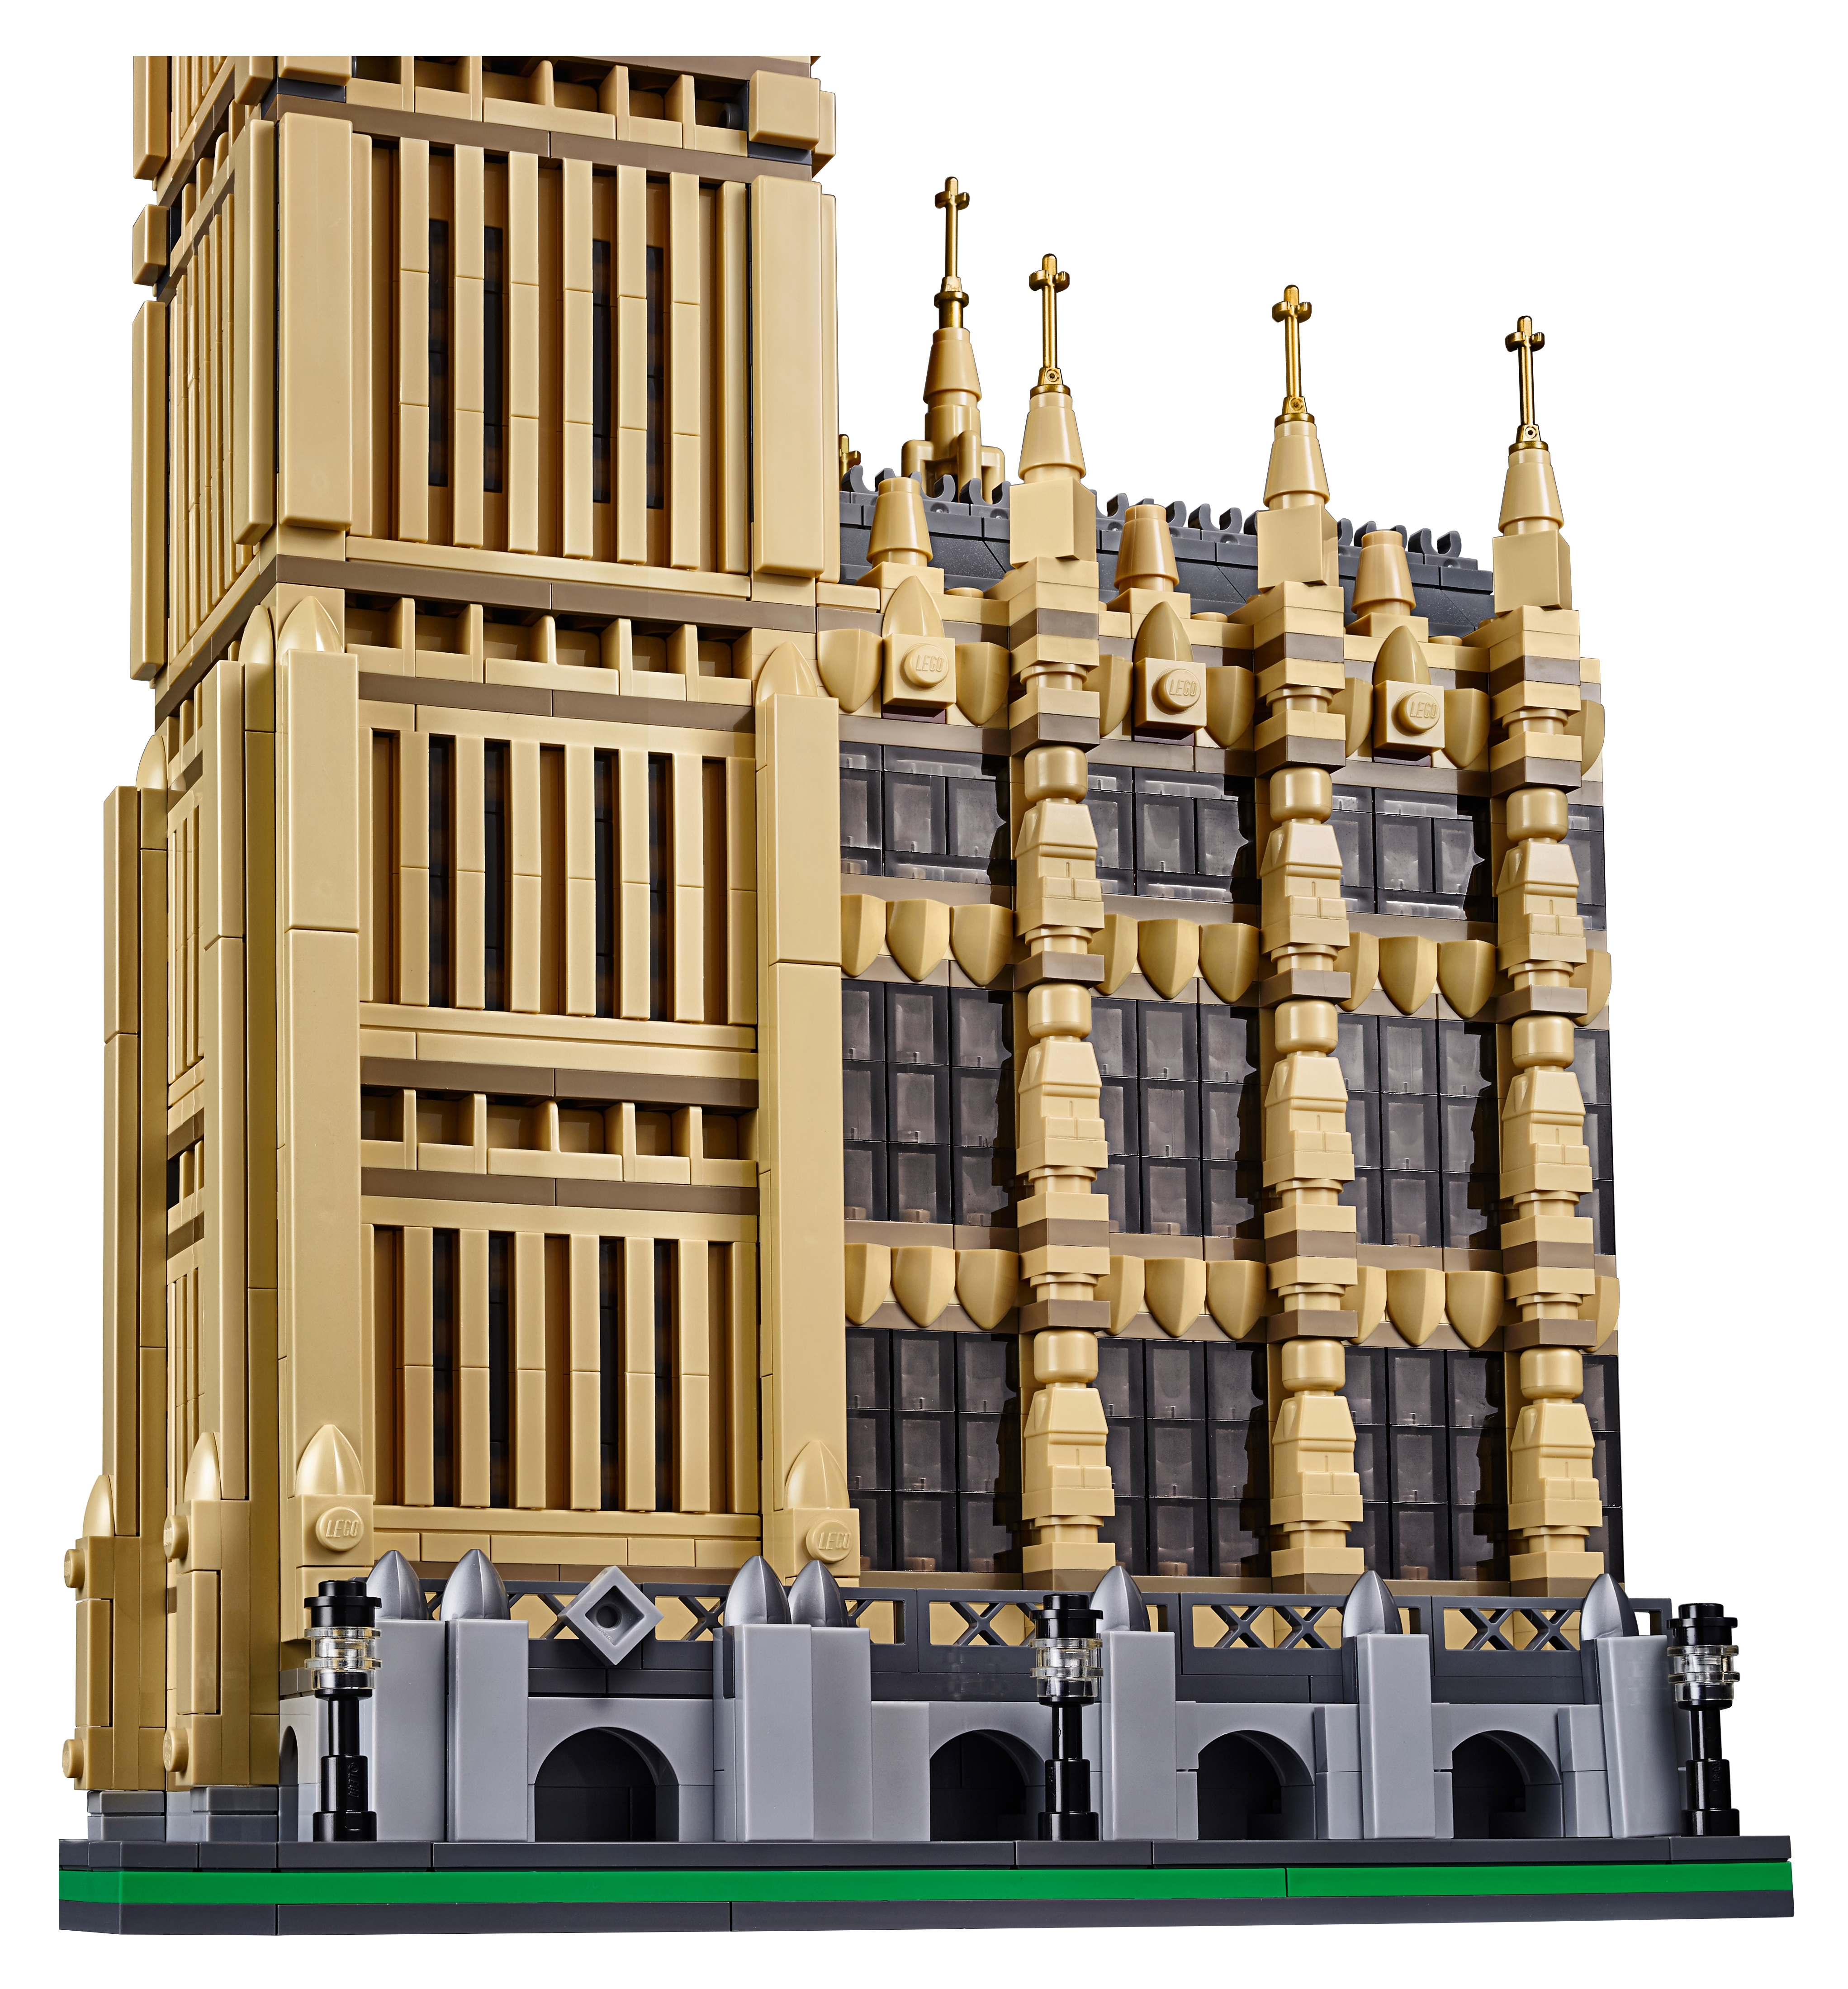 kalender inaktive Sovesal Big Ben 10253 | Creator Expert | Buy online at the Official LEGO® Shop US